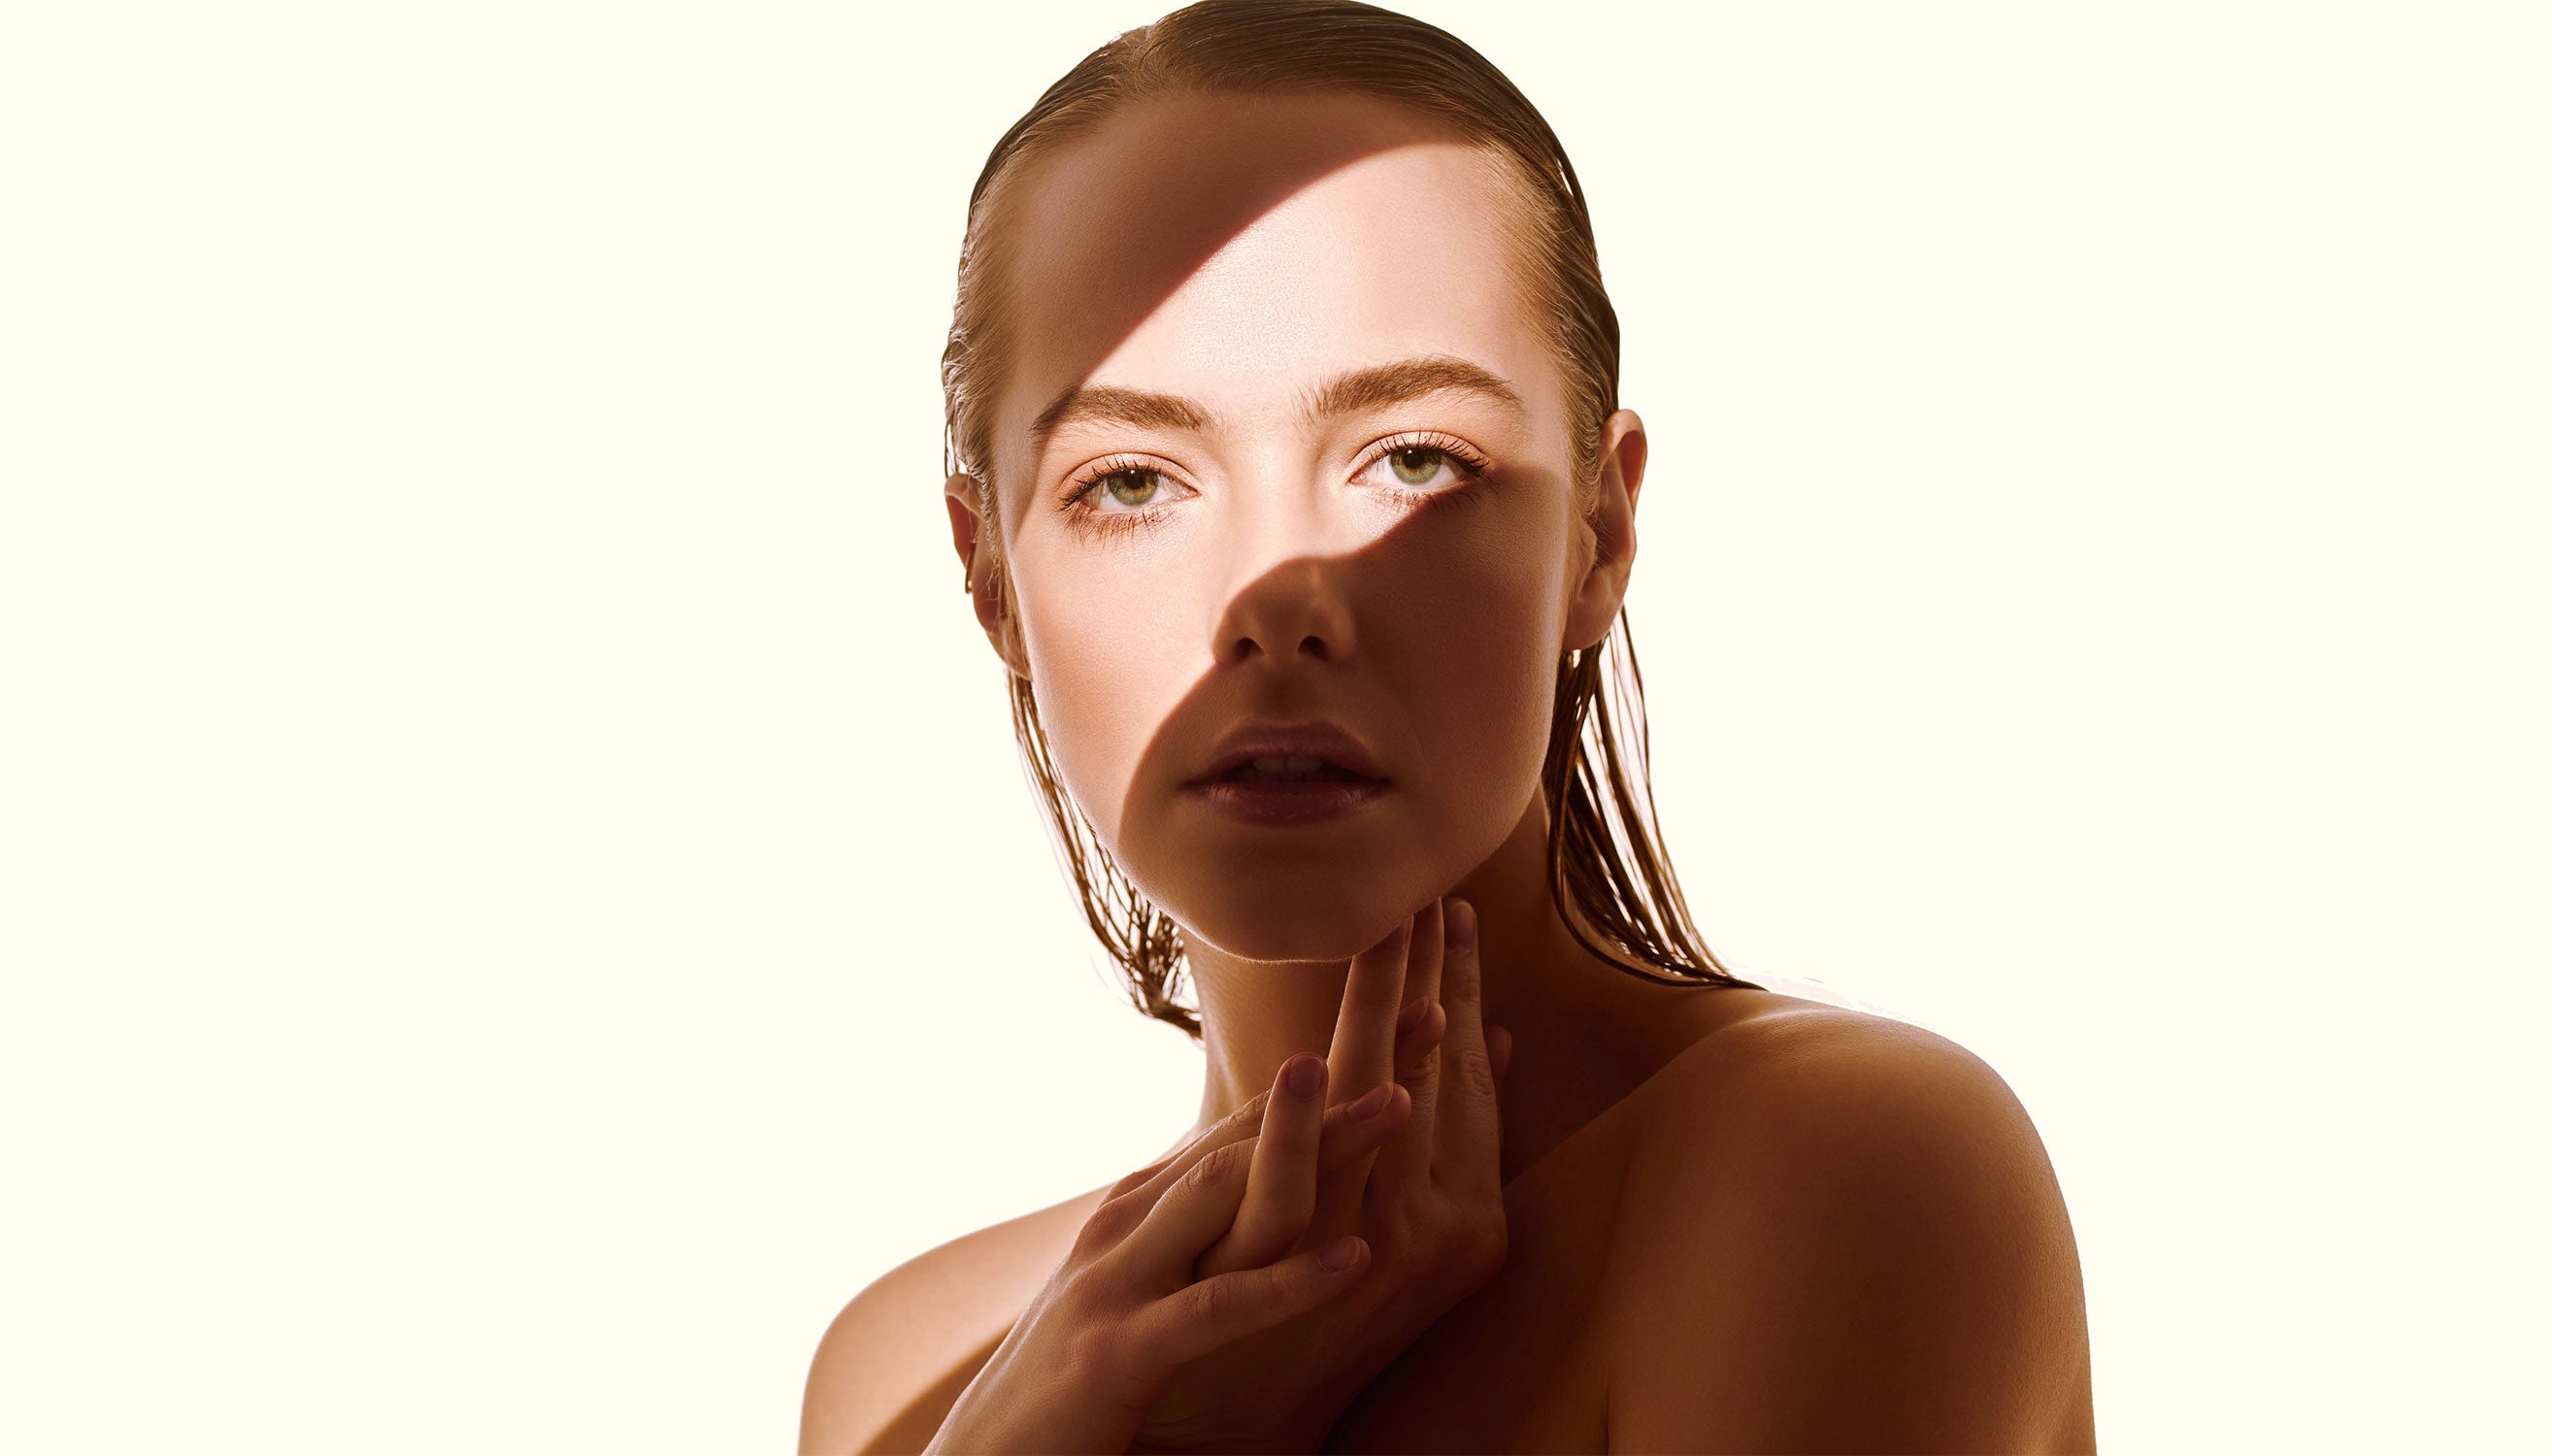 Dolce Vita Skin - Your premier cosmetic skin clinic